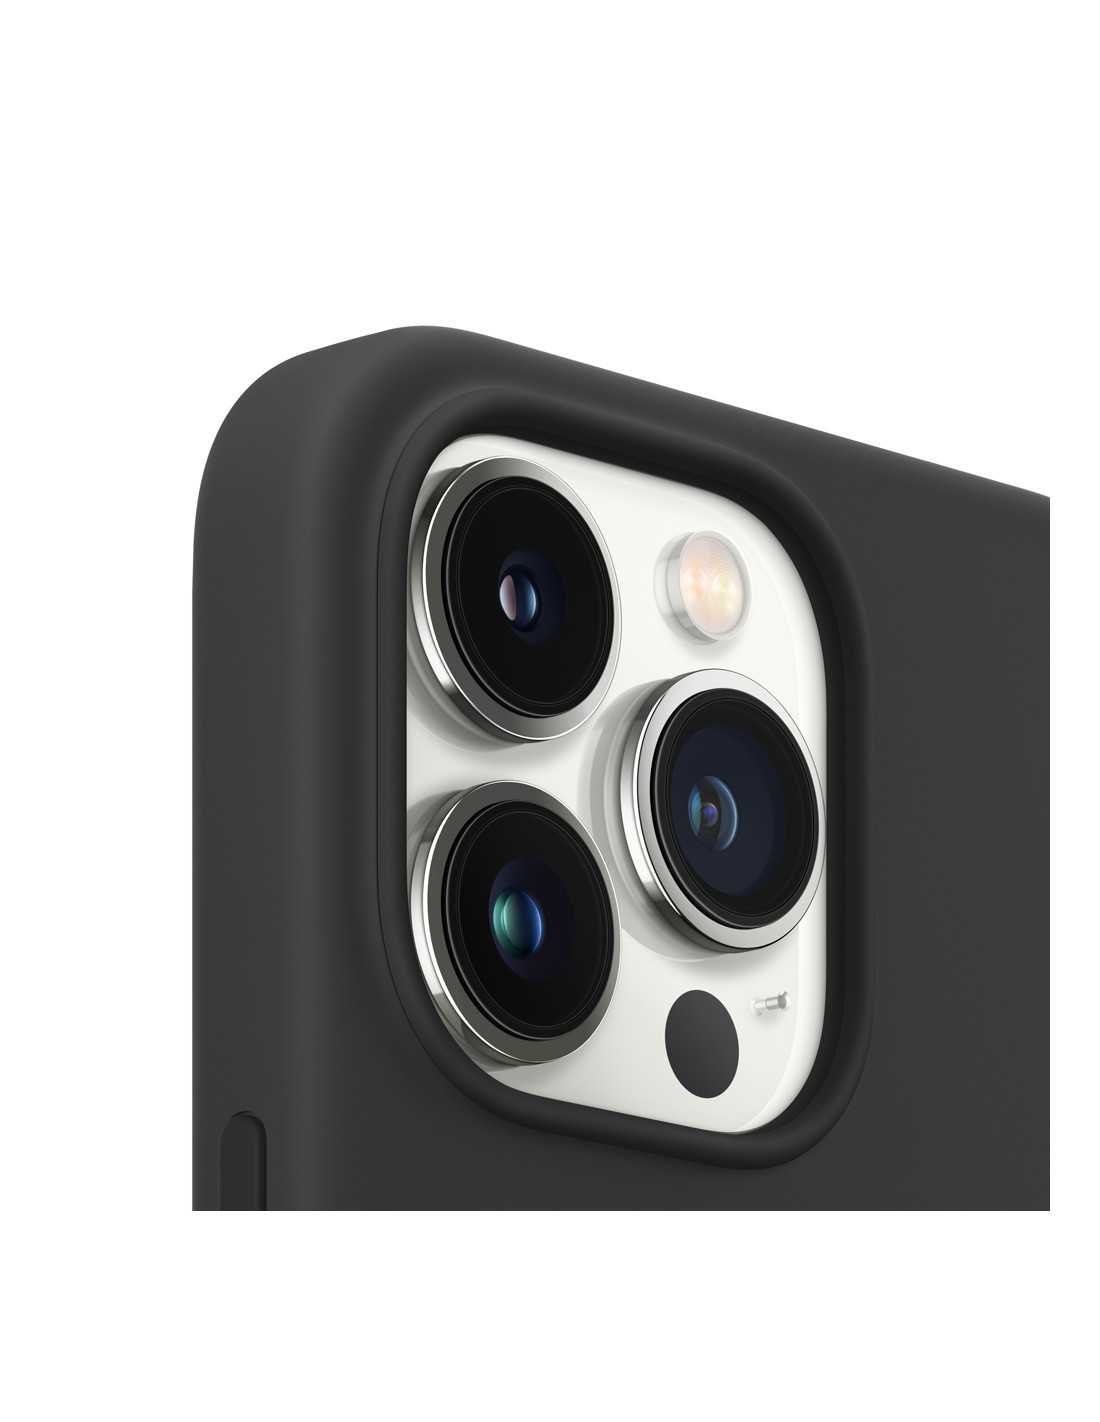 Funda Silicona Apple para iPhone 13 Pro Max con MagSafe –Midnight